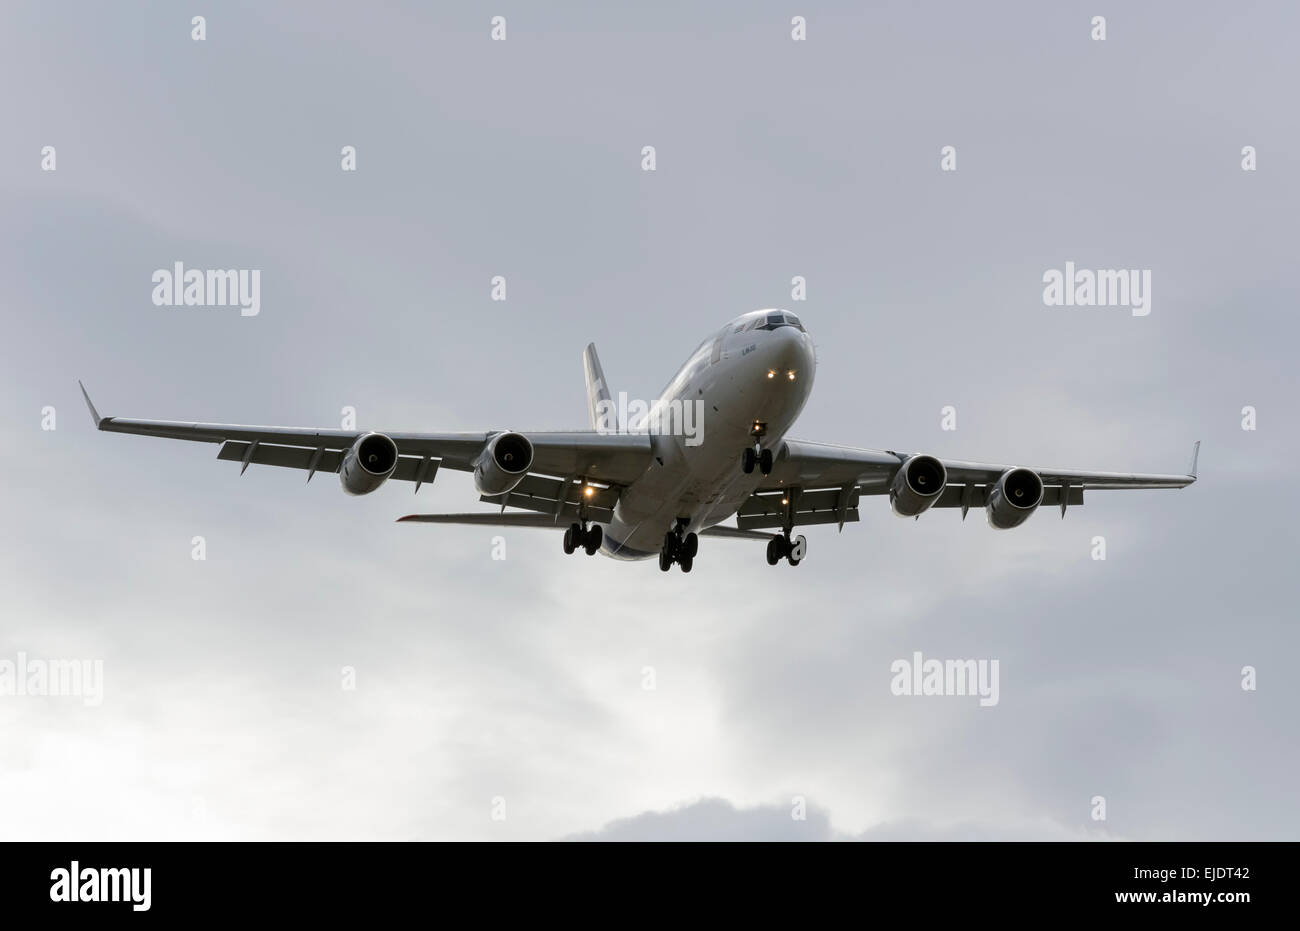 Flugzeug - Iliushin IL-96 - 300 - des - Cubana Airlines-Airline am Flughafen Madrid-Barajas - Adolfo Suarez - Landung. Stockfoto